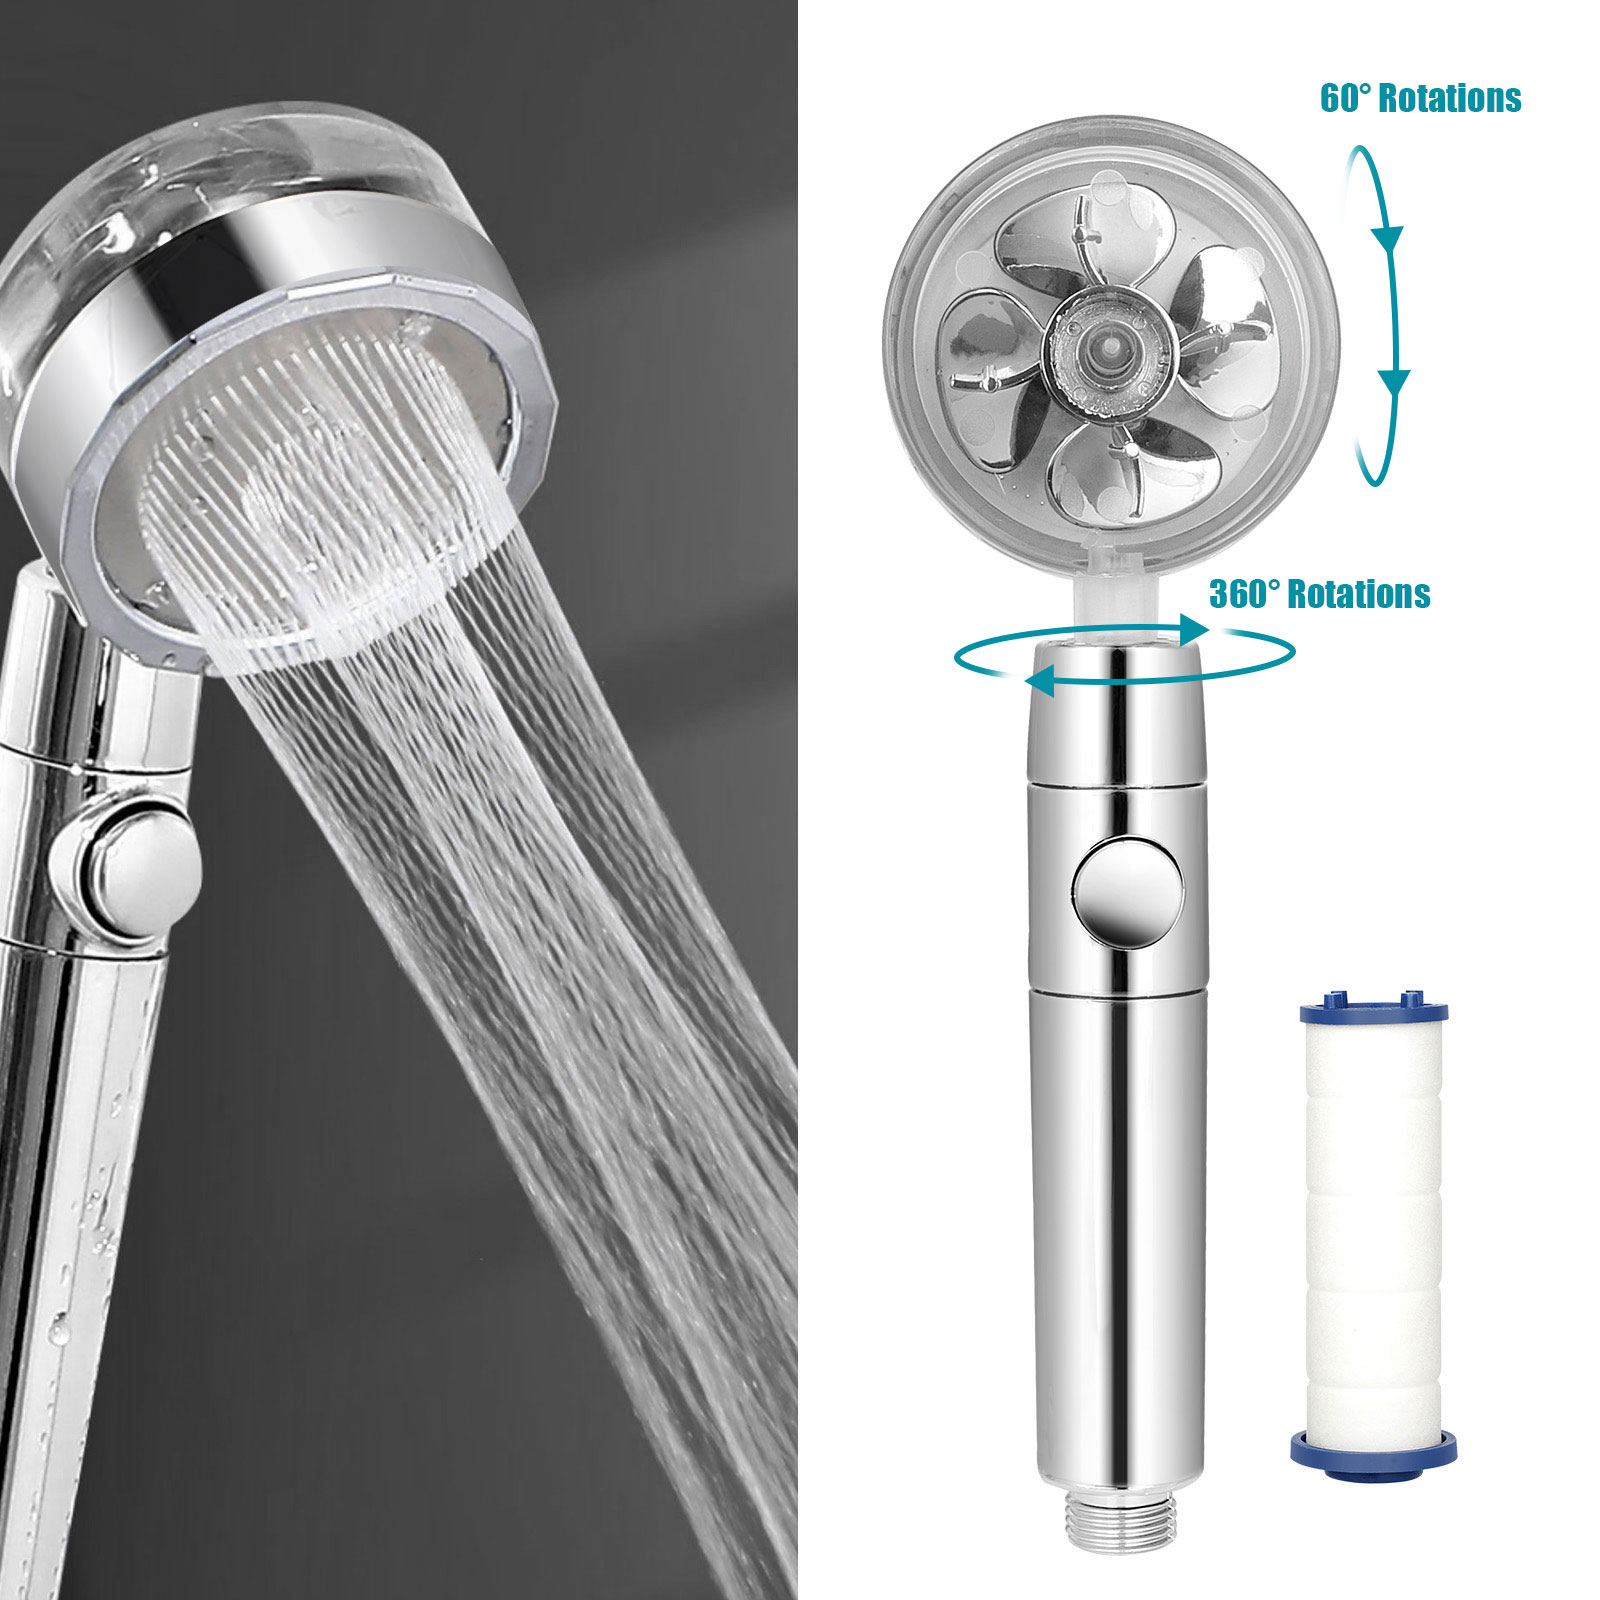 High-Pressure Shower Head Adjustable 360° Rotation Turbine Water Saving w/  Fan | eBay